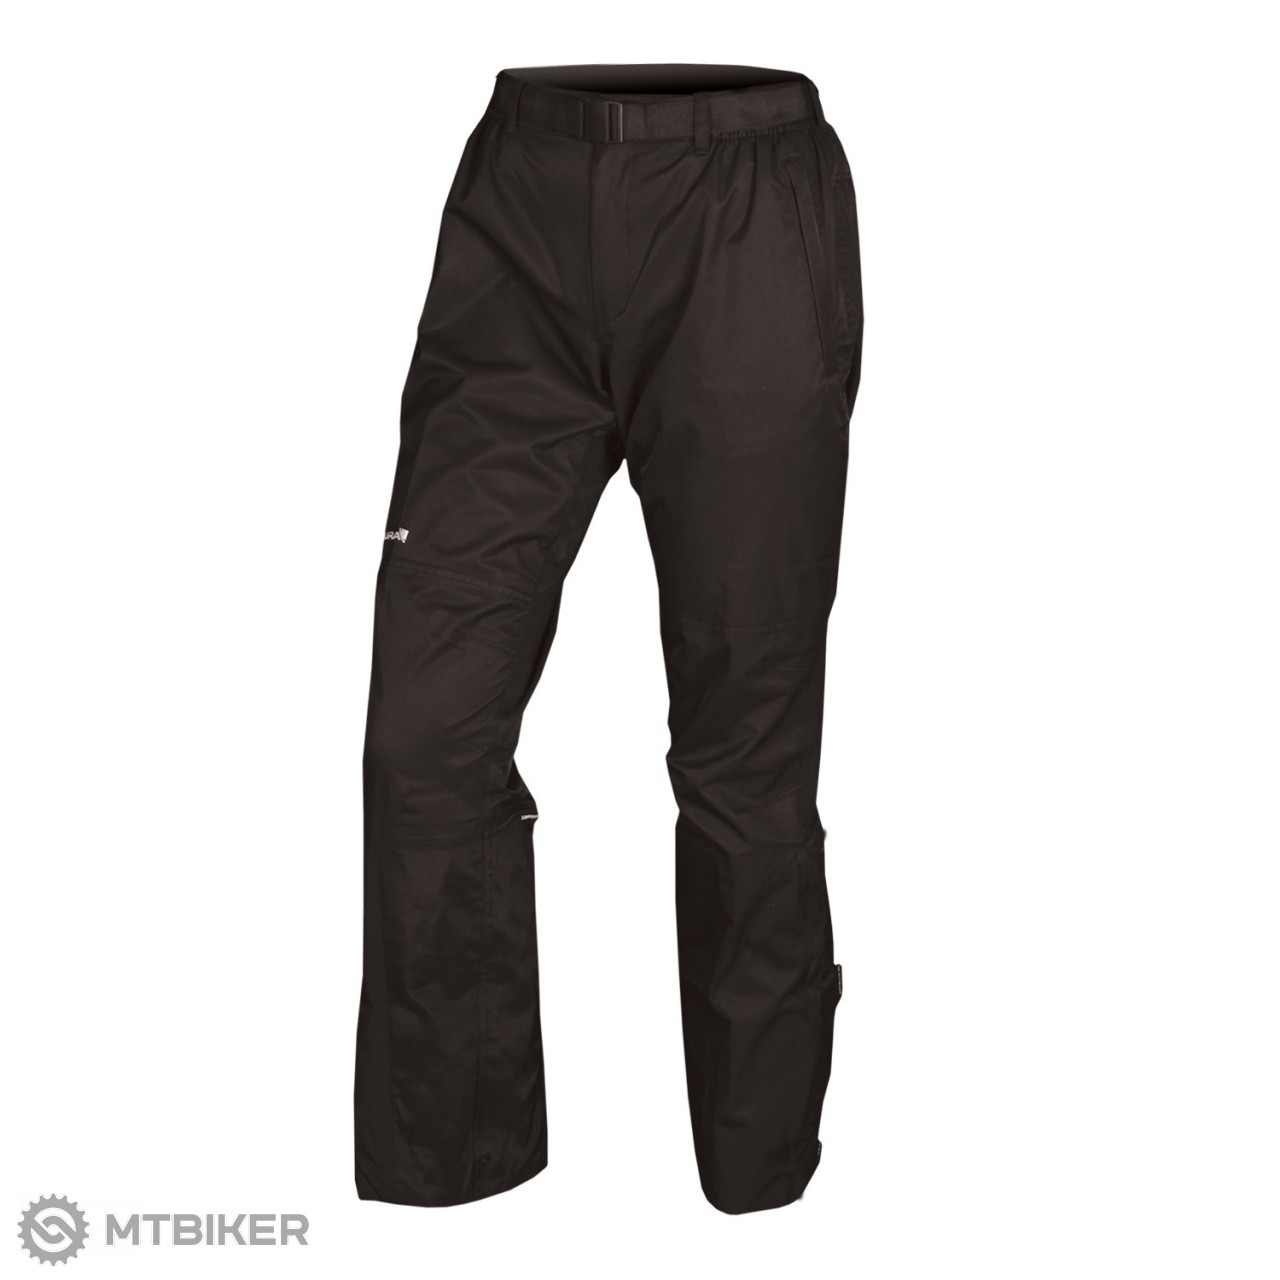 Endura Gridlock II dámské kalhoty, černá